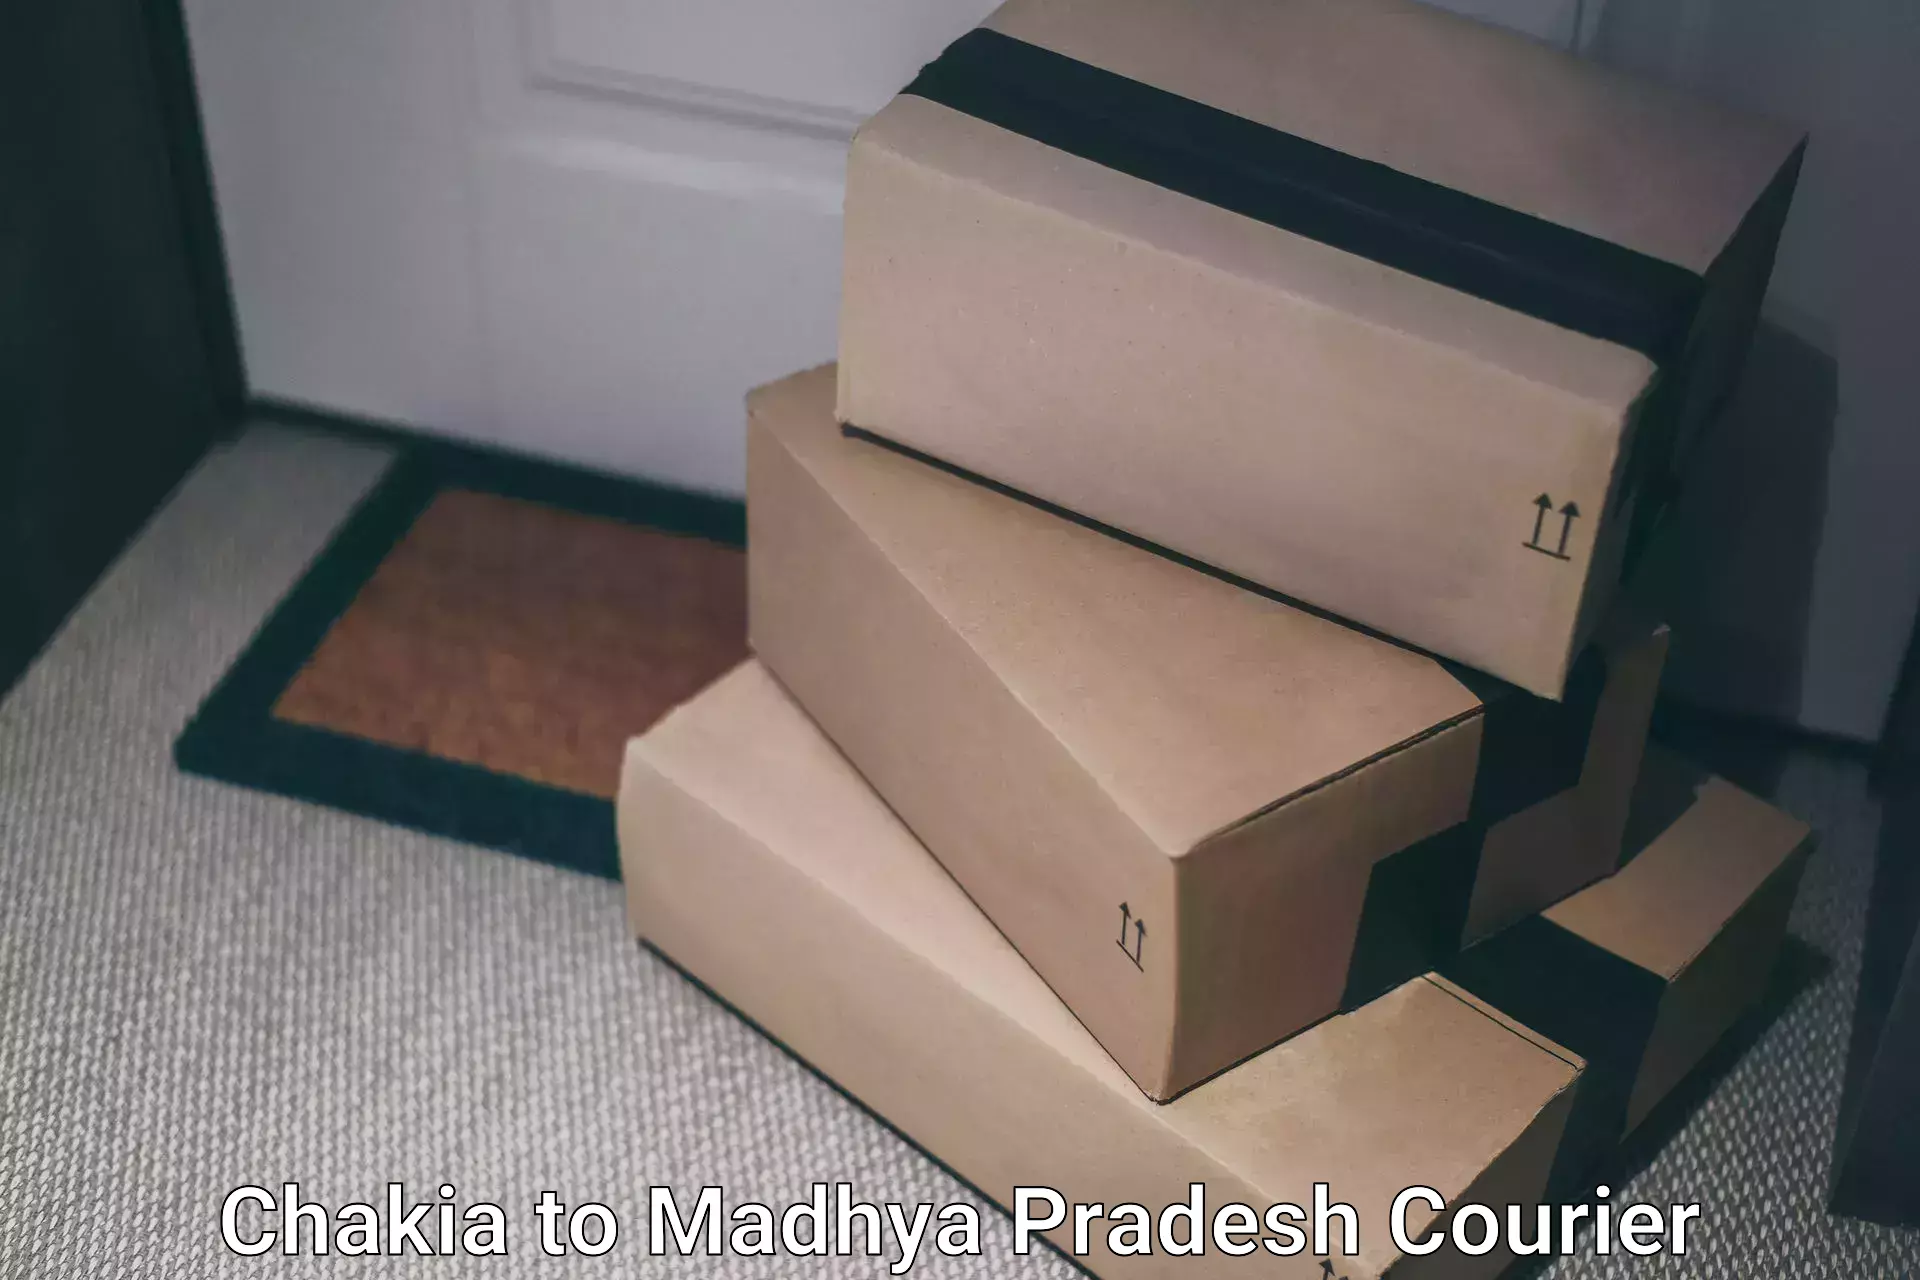 User-friendly delivery service Chakia to Madhya Pradesh